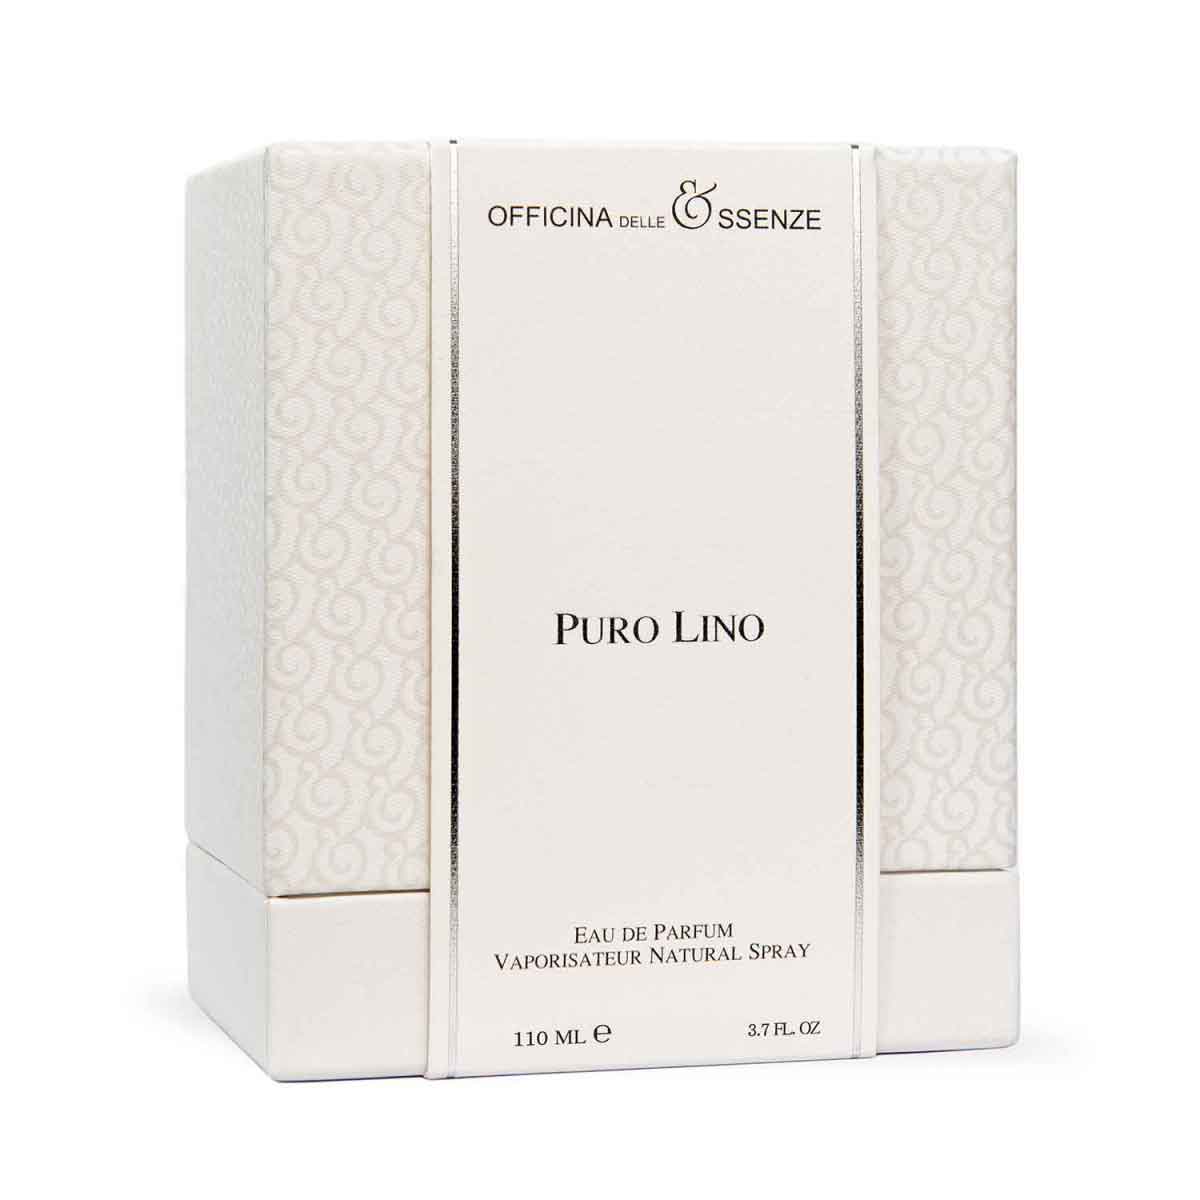 Eau de Parfum package Puro Lino